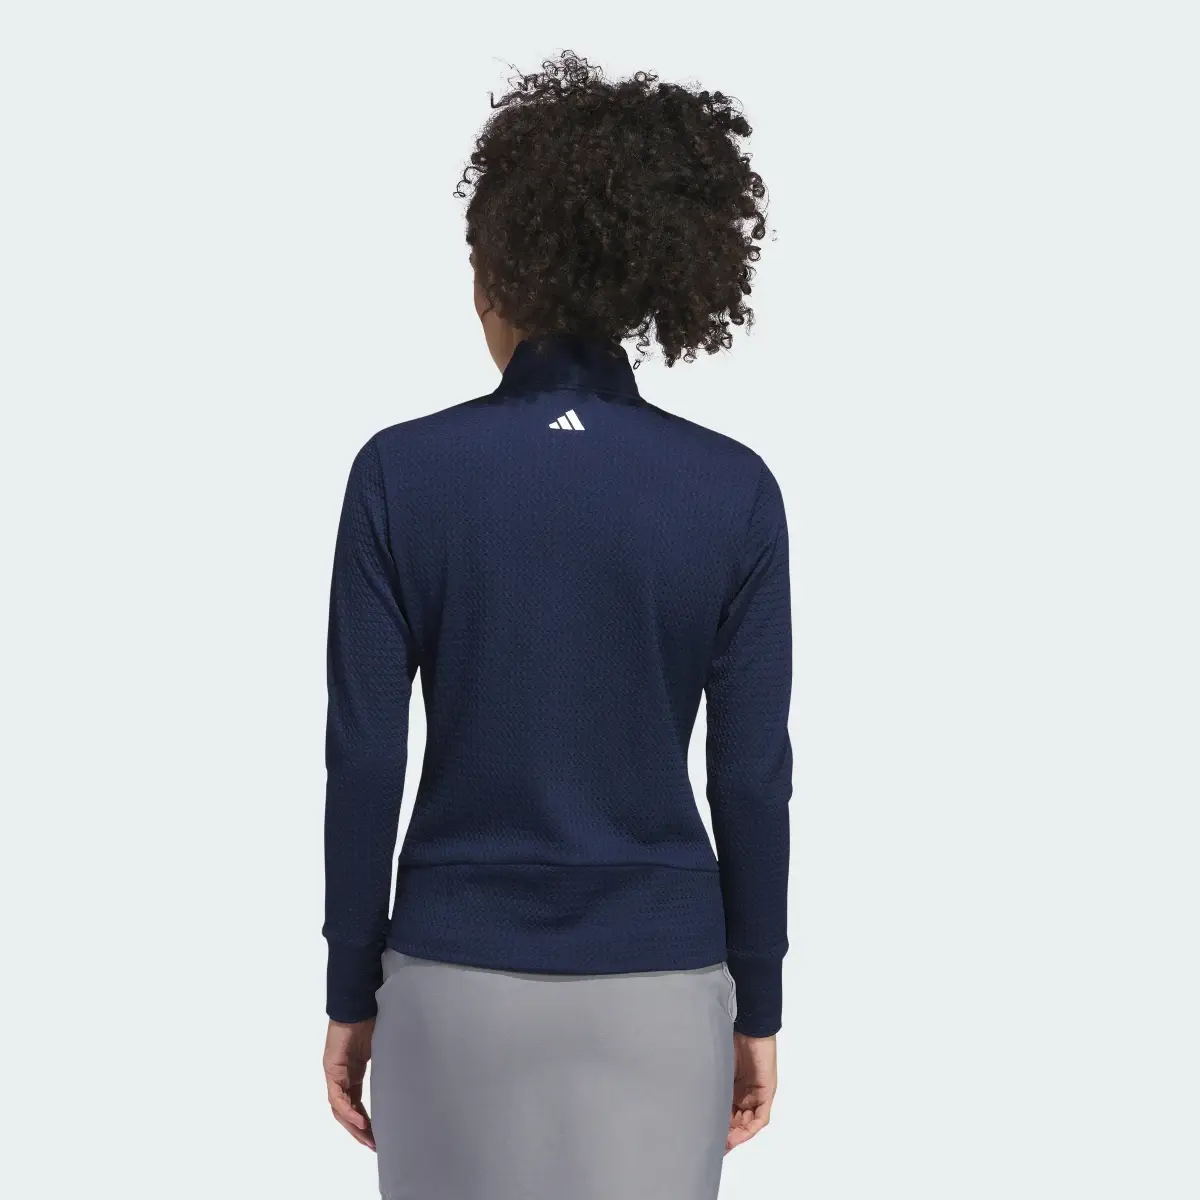 Adidas Women's Ultimate365 Textured Jacket. 3